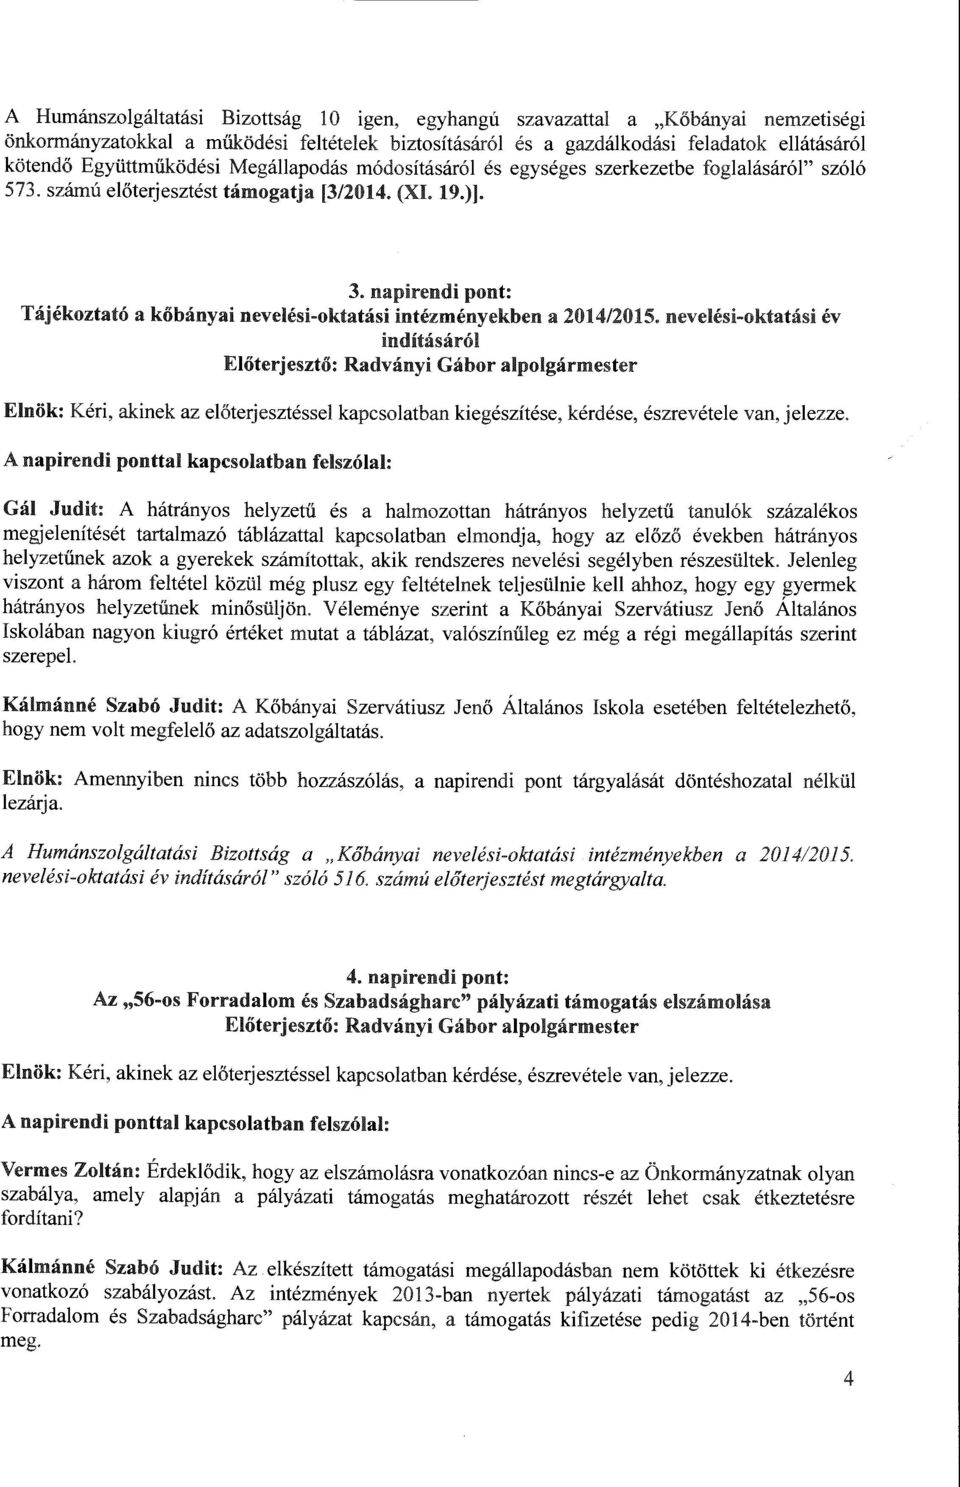 napi:rendi pont: Tajekoztato a kobanyai nevelesi-oktatasi intezmenyekben a 2014/2015.